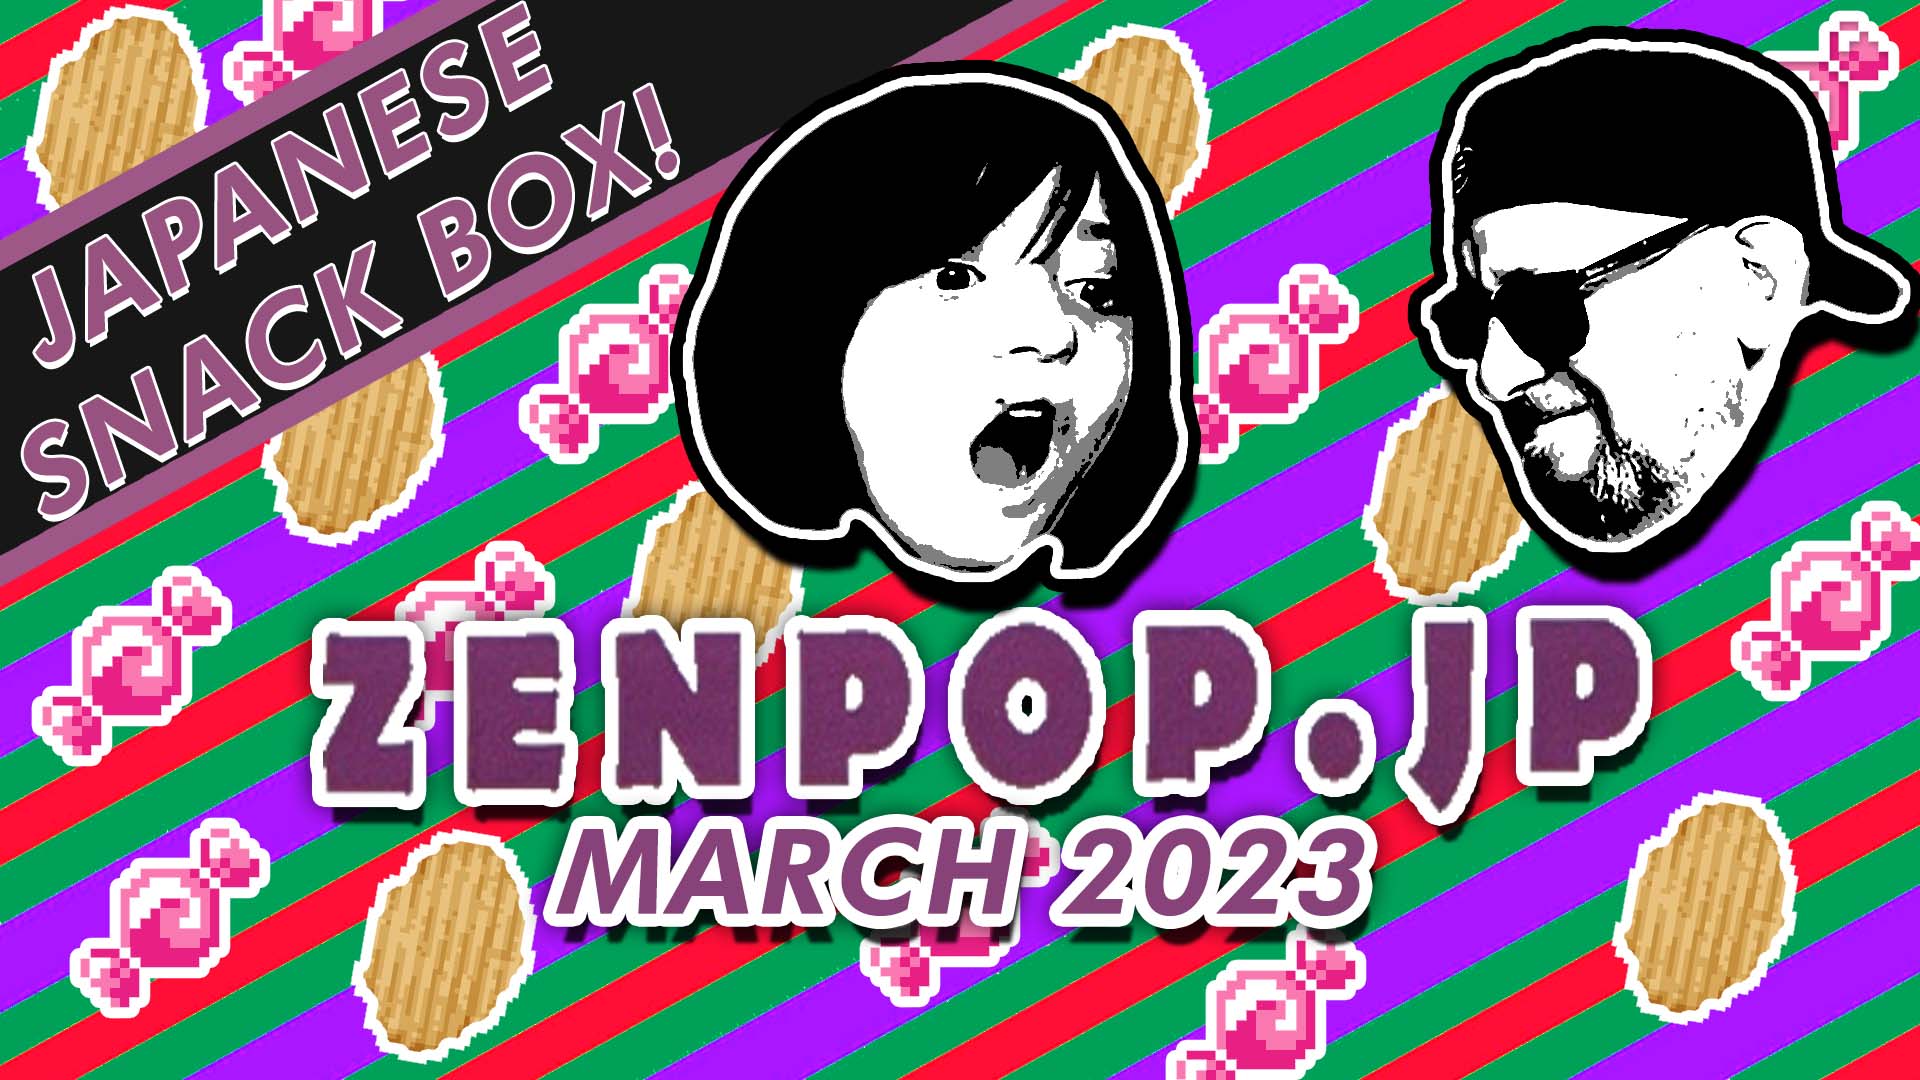 1920px x 1080px - Zenpop.jp Japanese Snack Box Taste Test March 2023